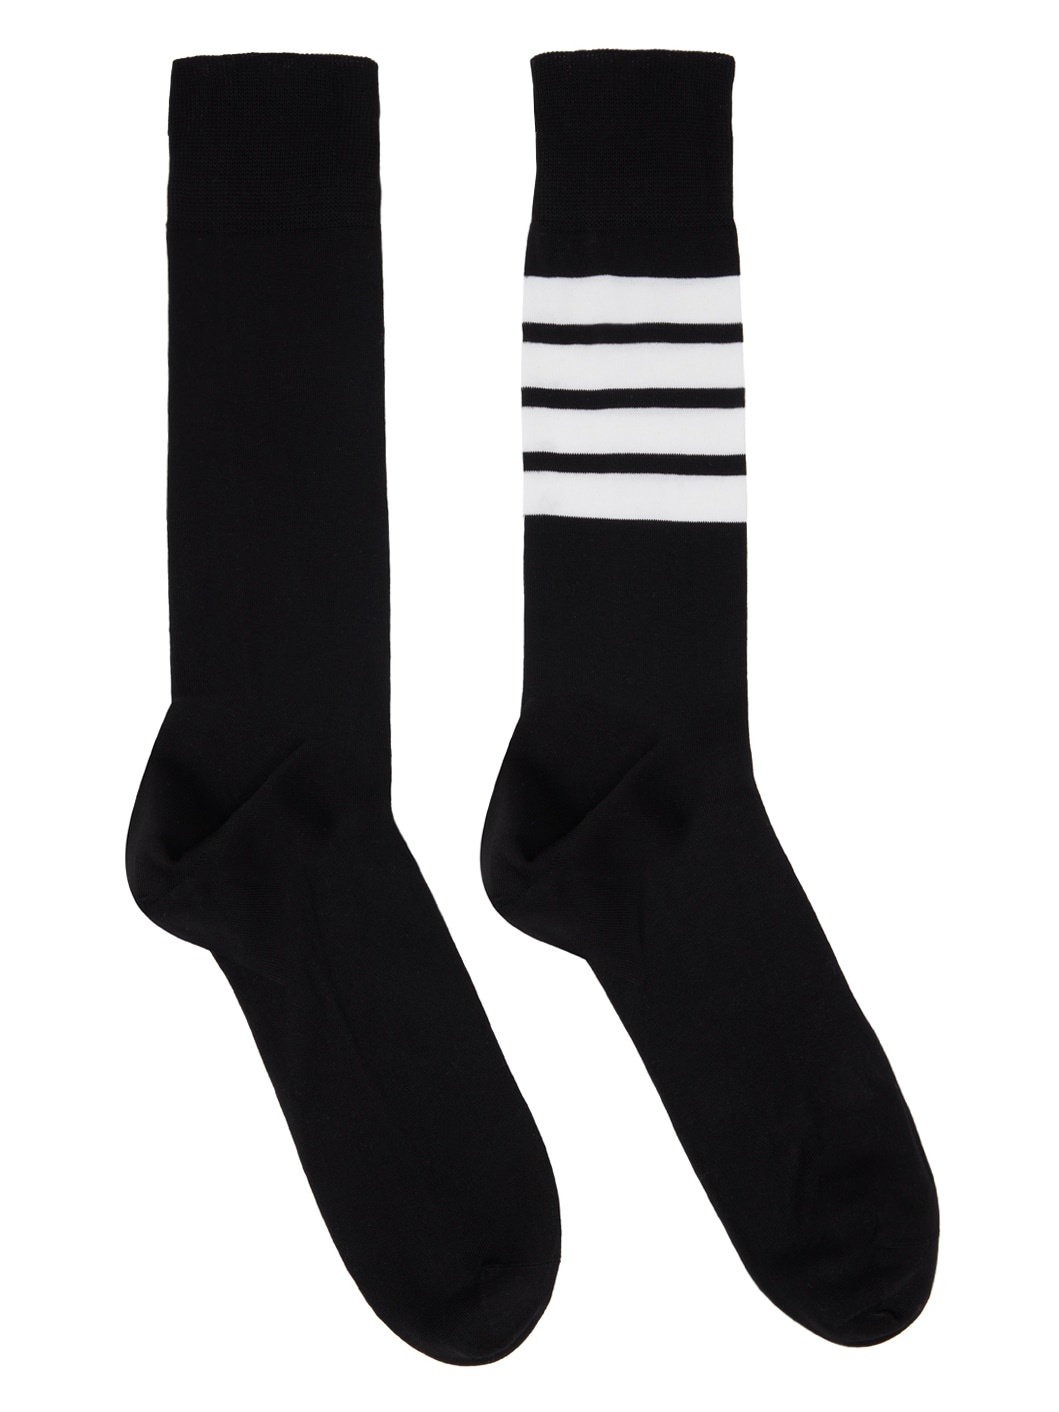 Black 4-Bar Stripe Socks - 1